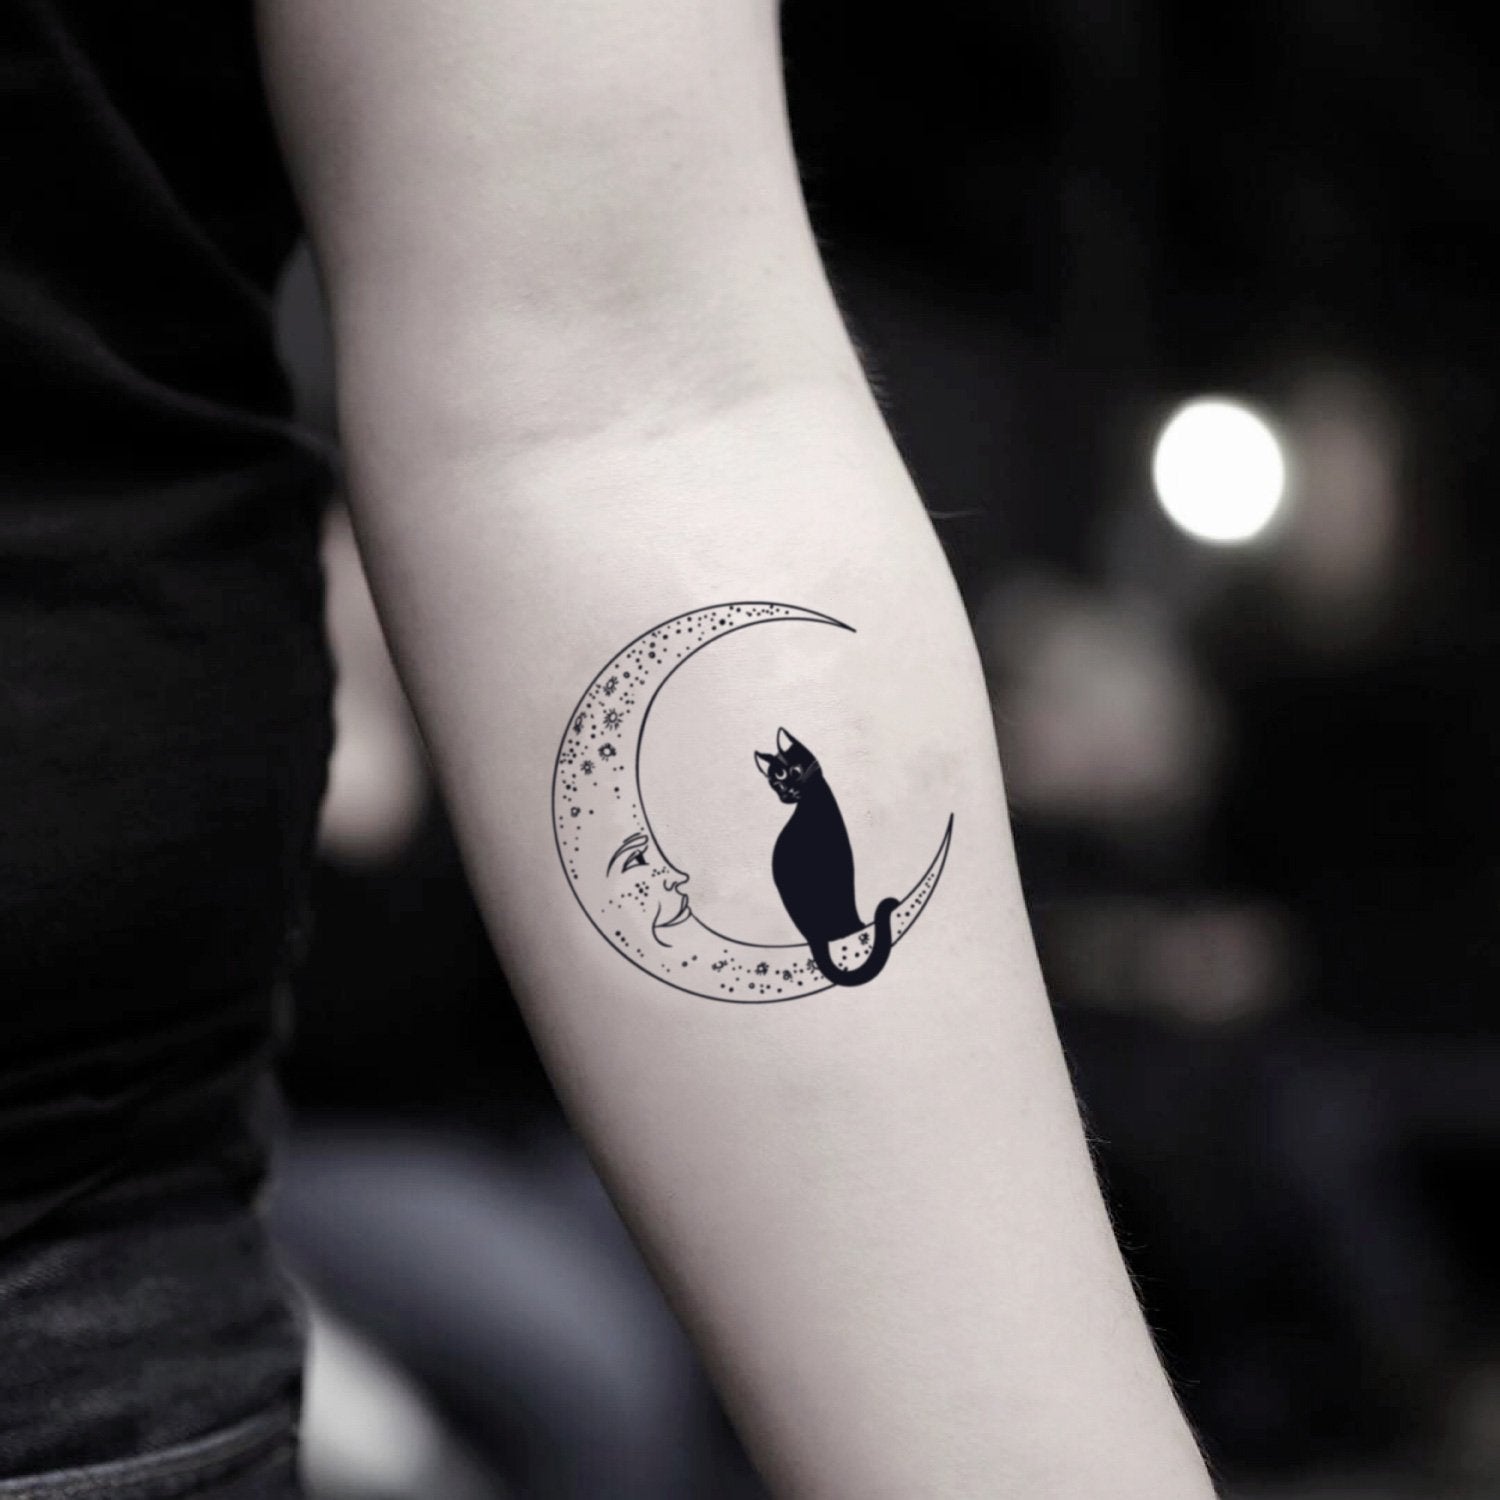 Dog Tattoo: 17 Amazing Design Ideas For Dog Lovers - DodoWell - The Dodo